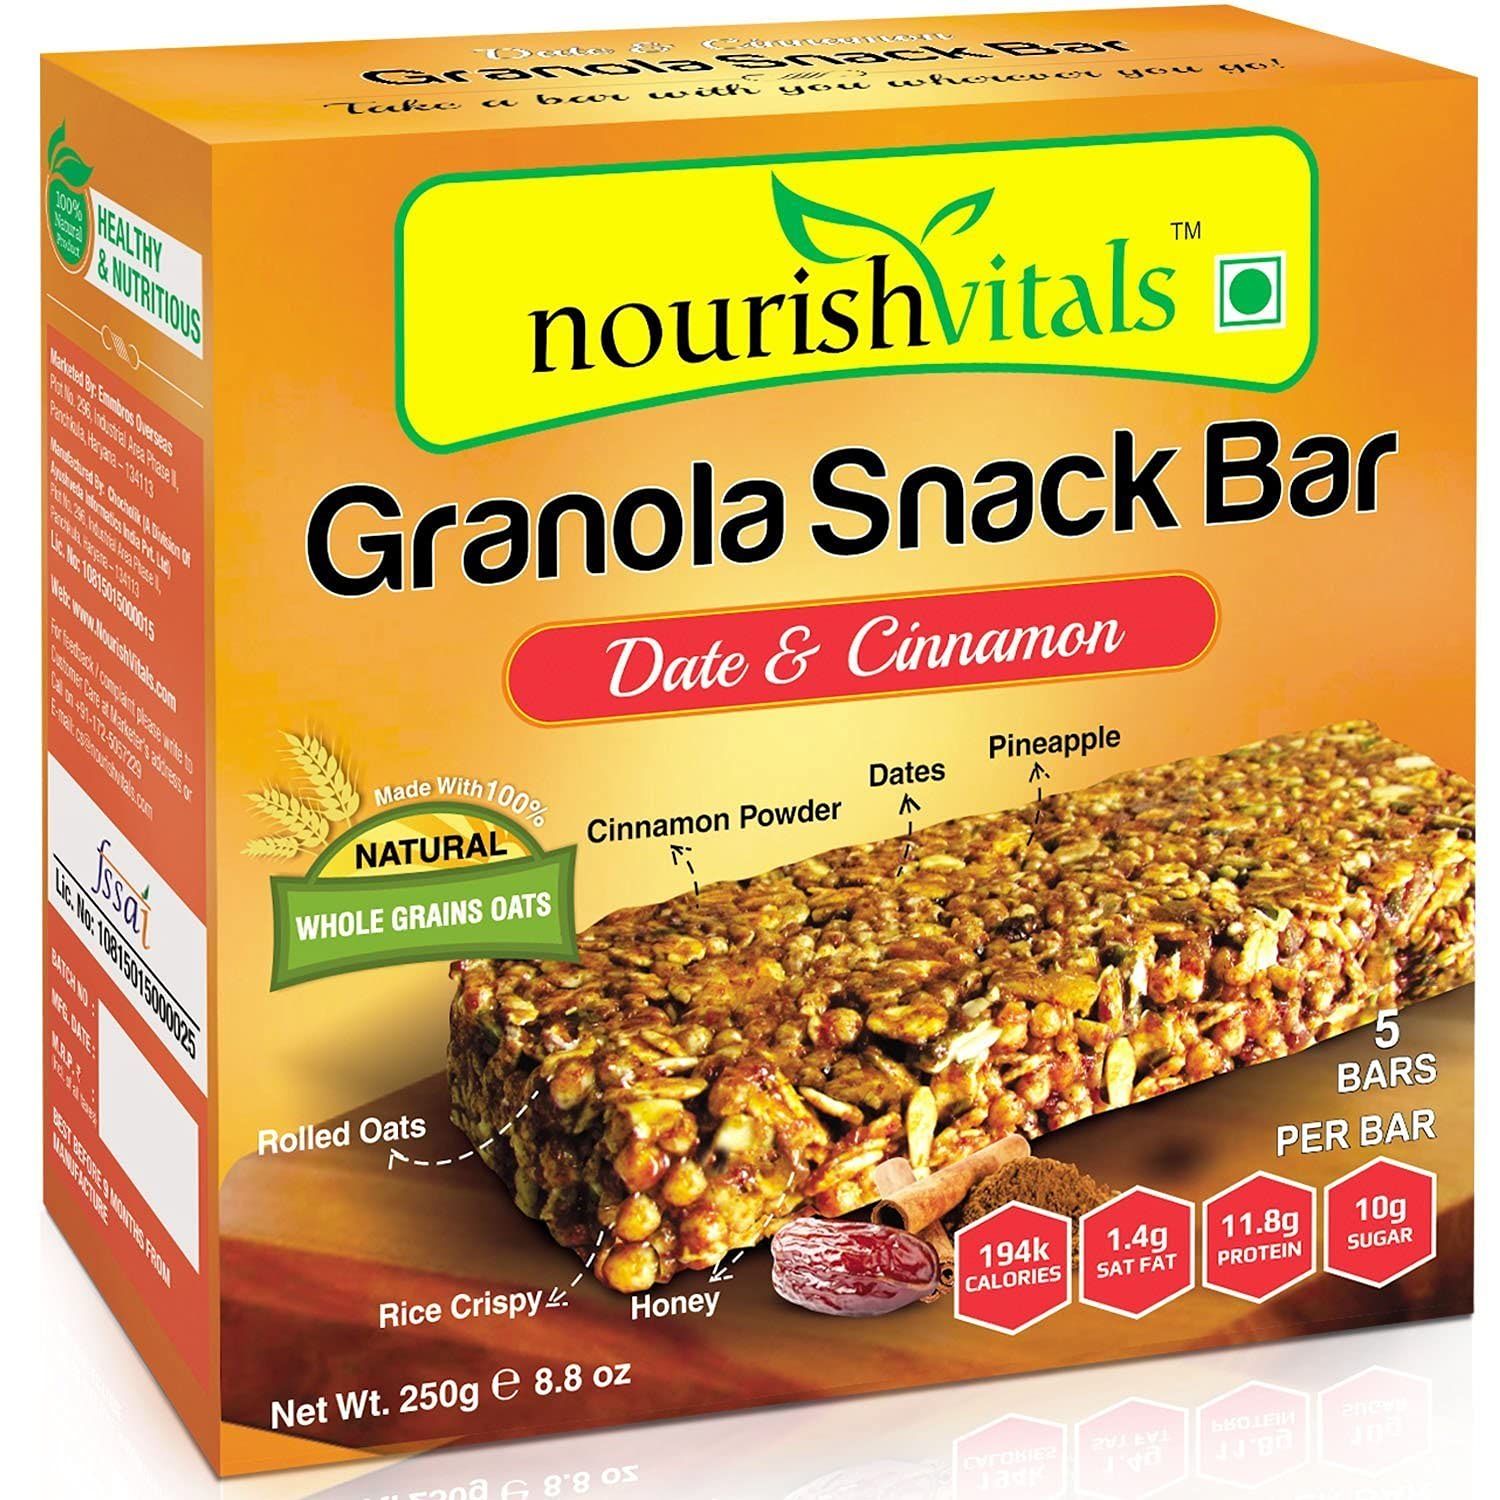 NourishVitals Date and Cinnamon Granola Snack Bar Image